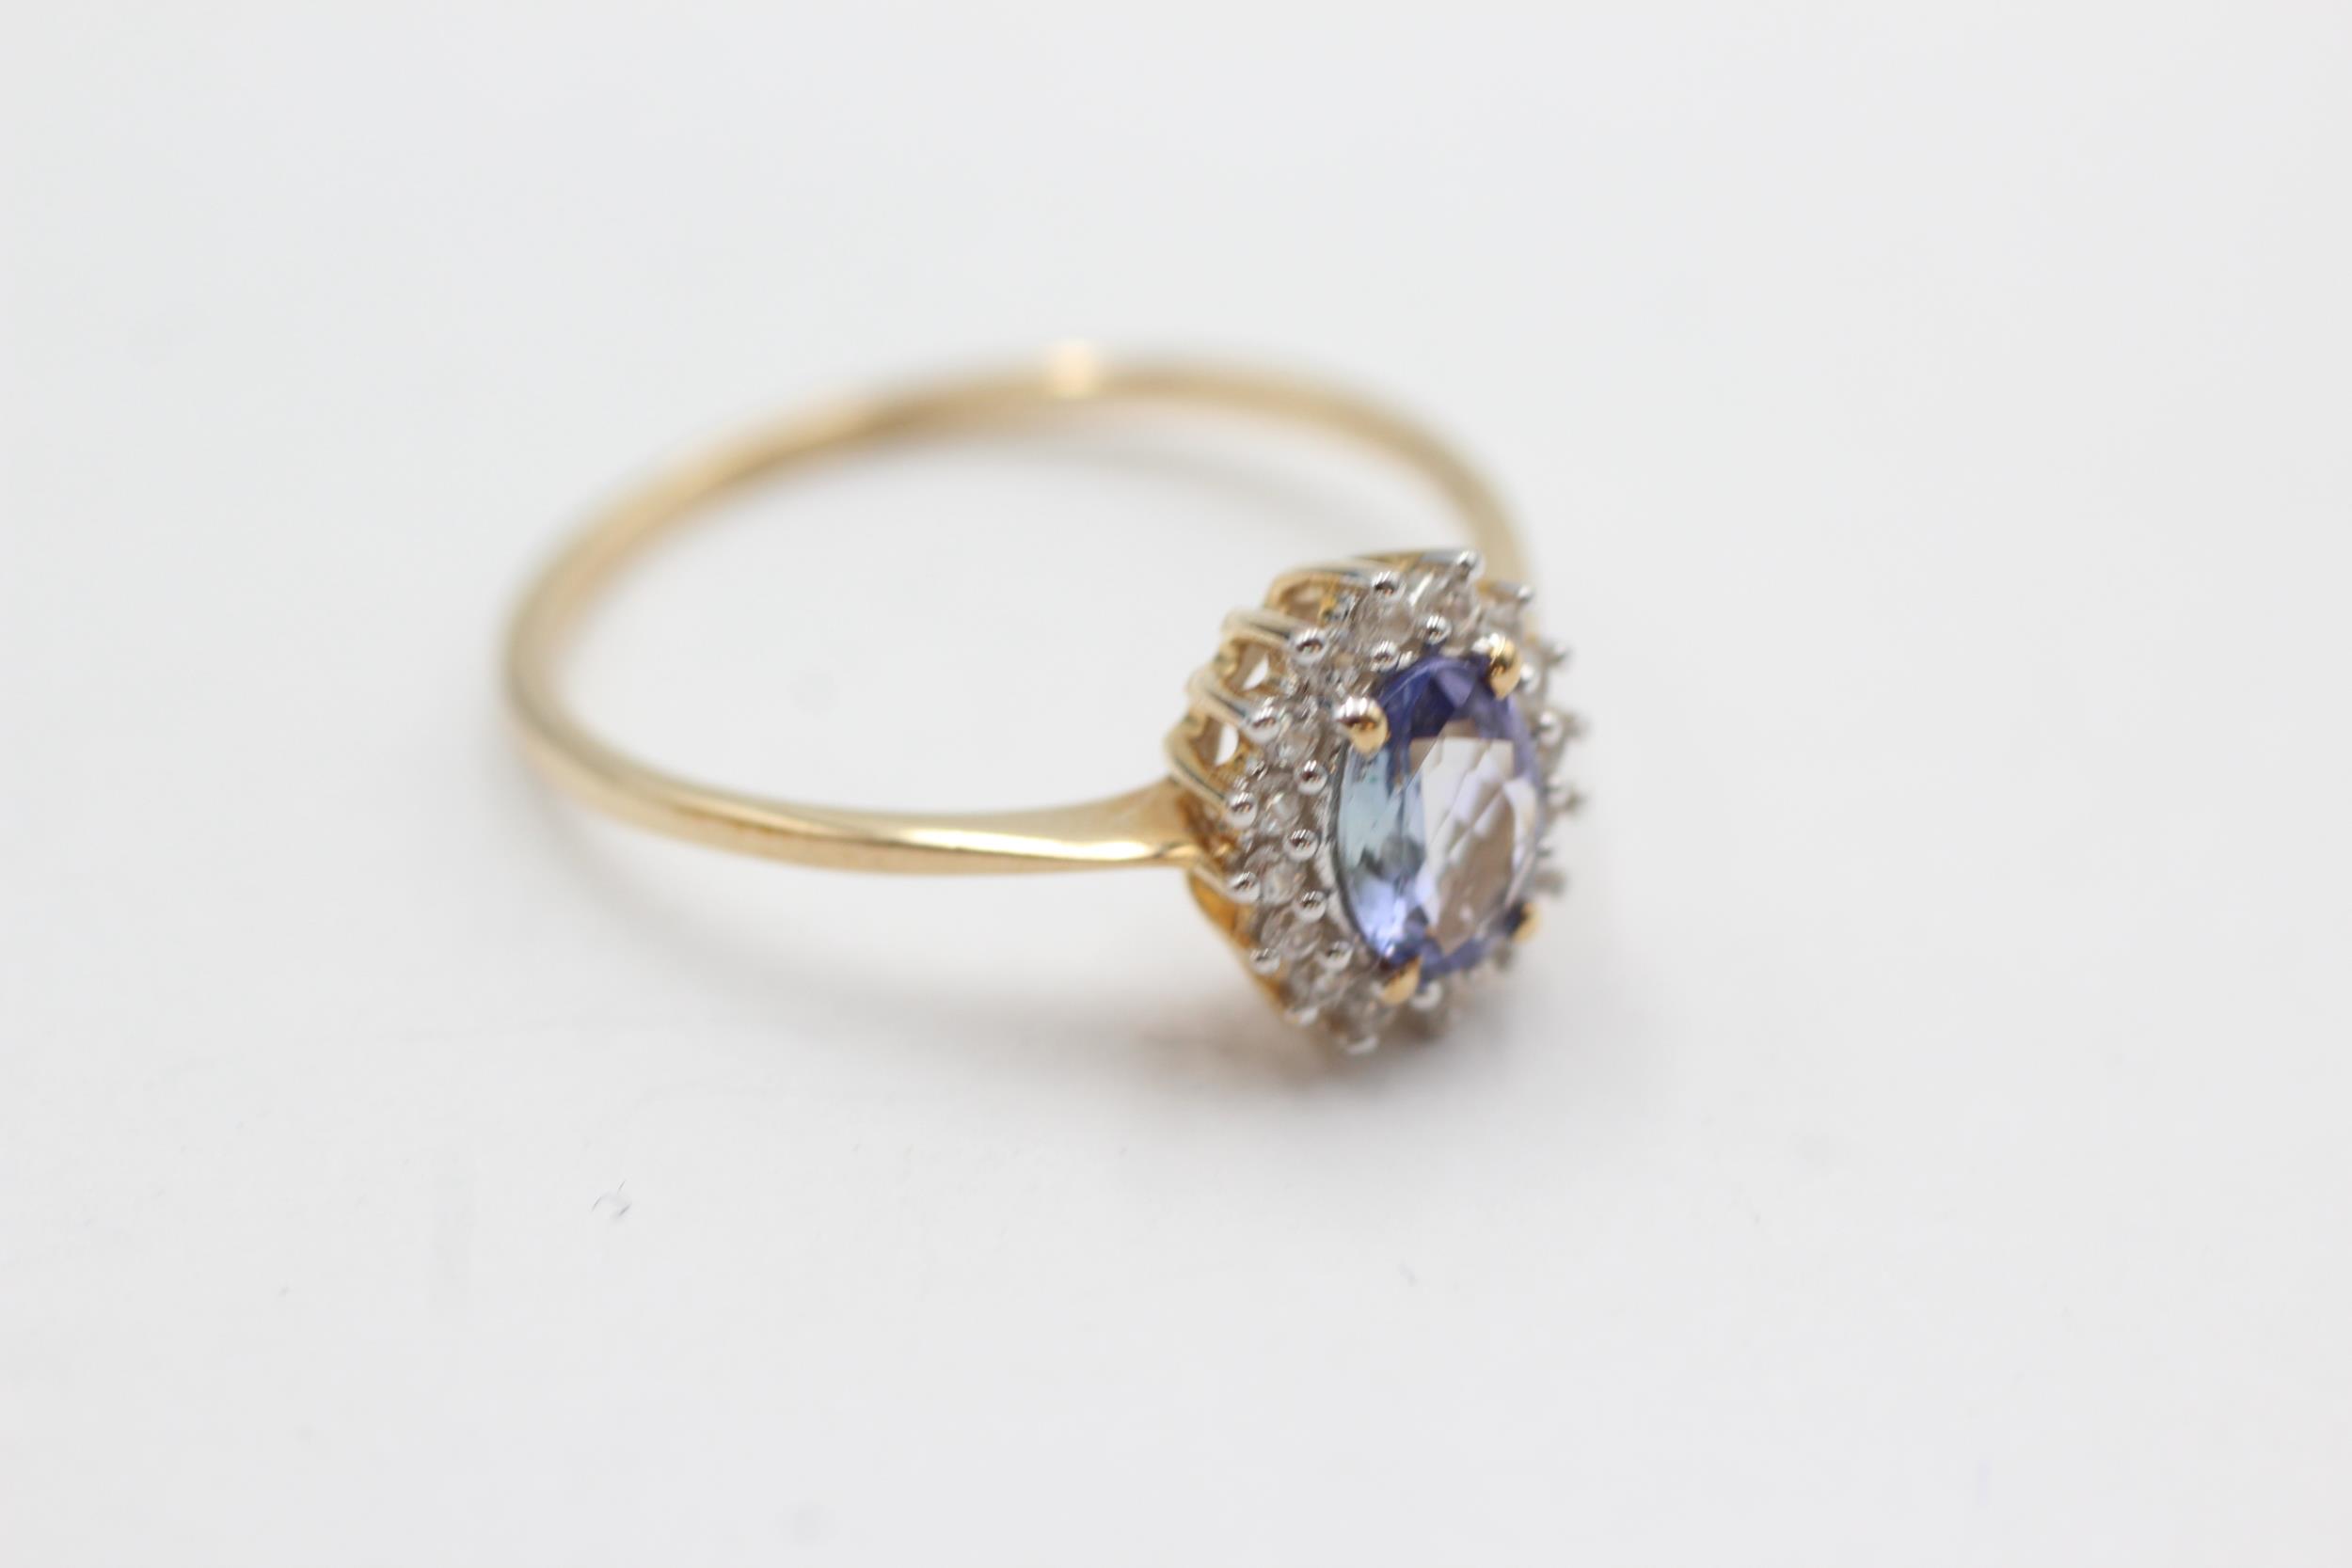 9ct gold clear gemstone & tanzanite halo ring (2.1g) Size U - Image 2 of 4